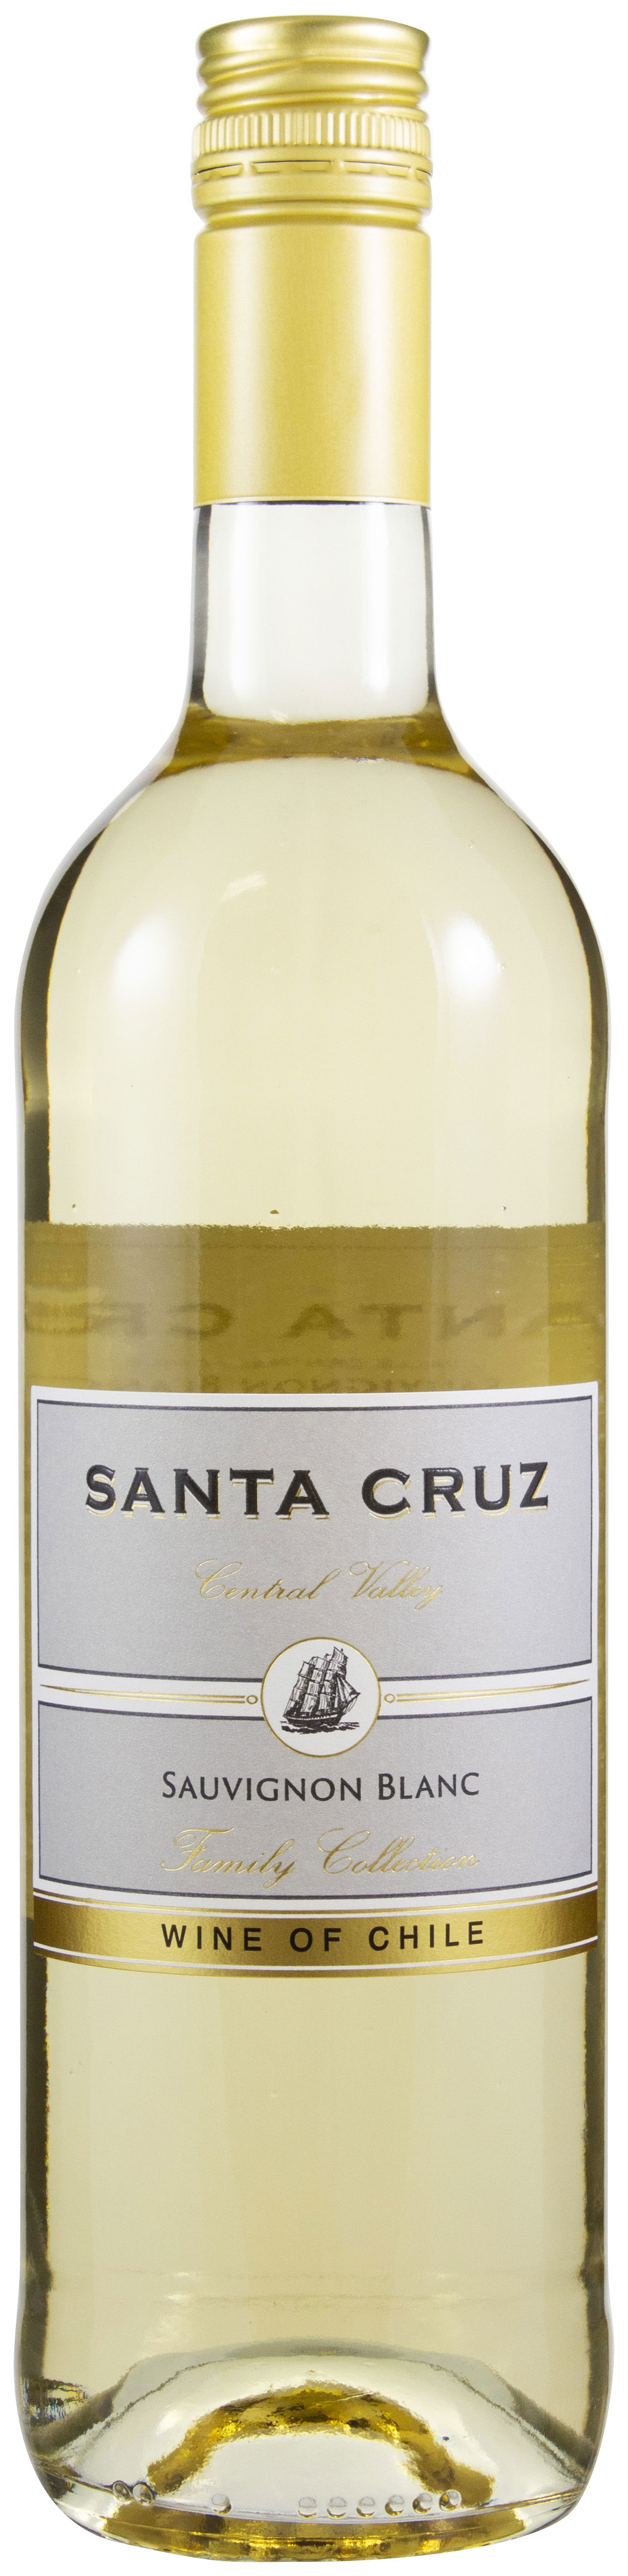 Santa Cruz Sauvignon Blanc 